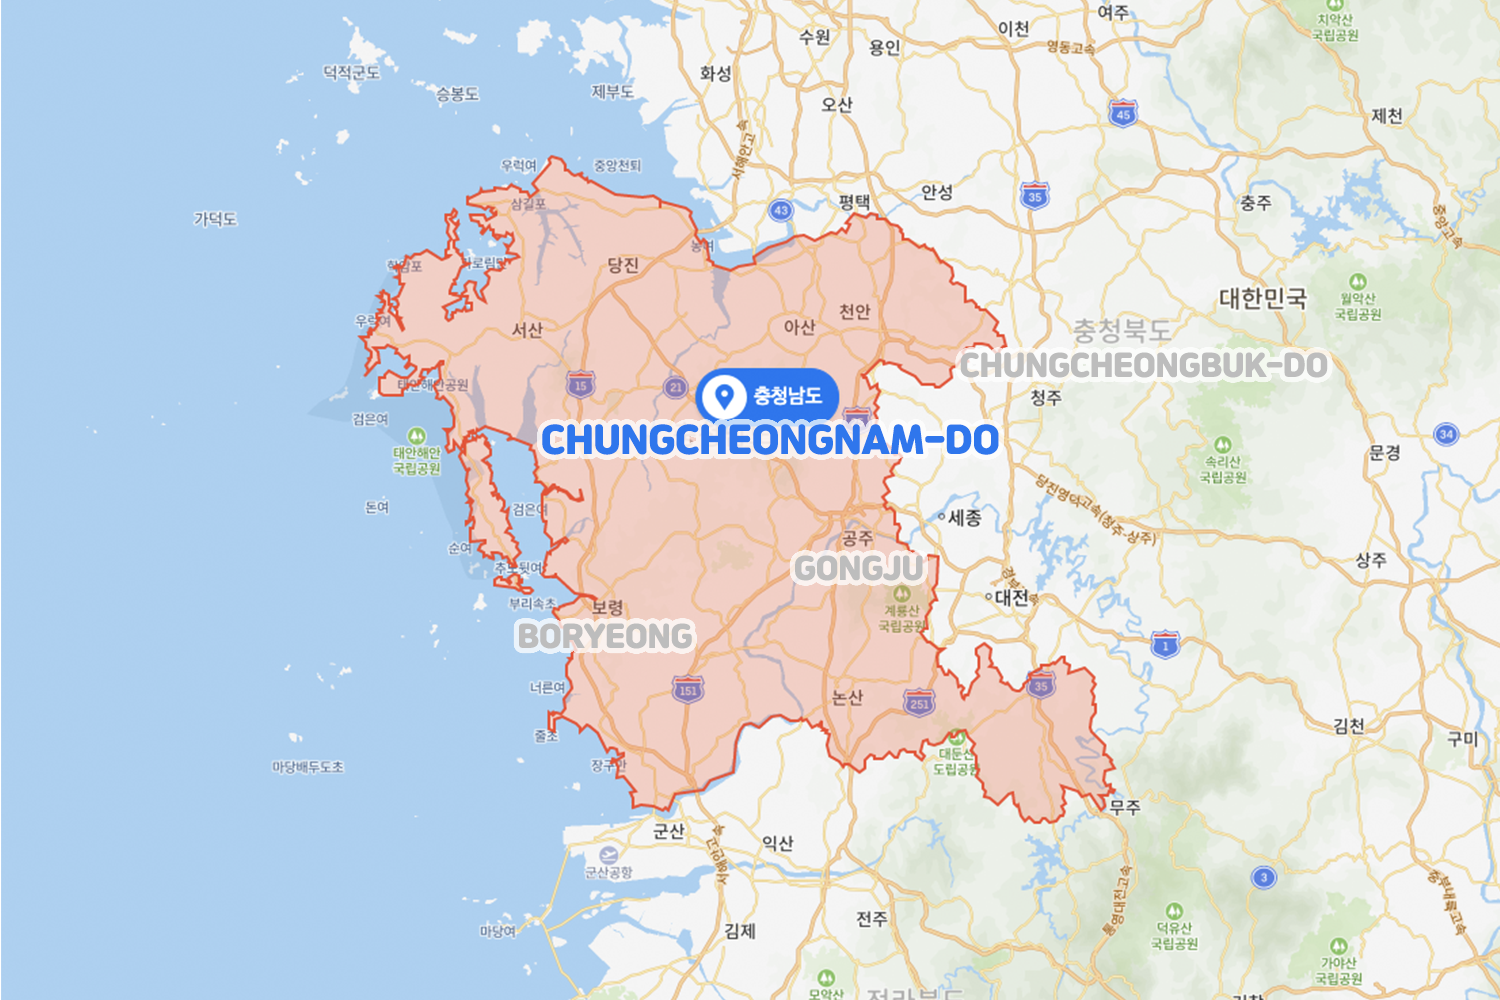 chungcheongnam-do map in korea